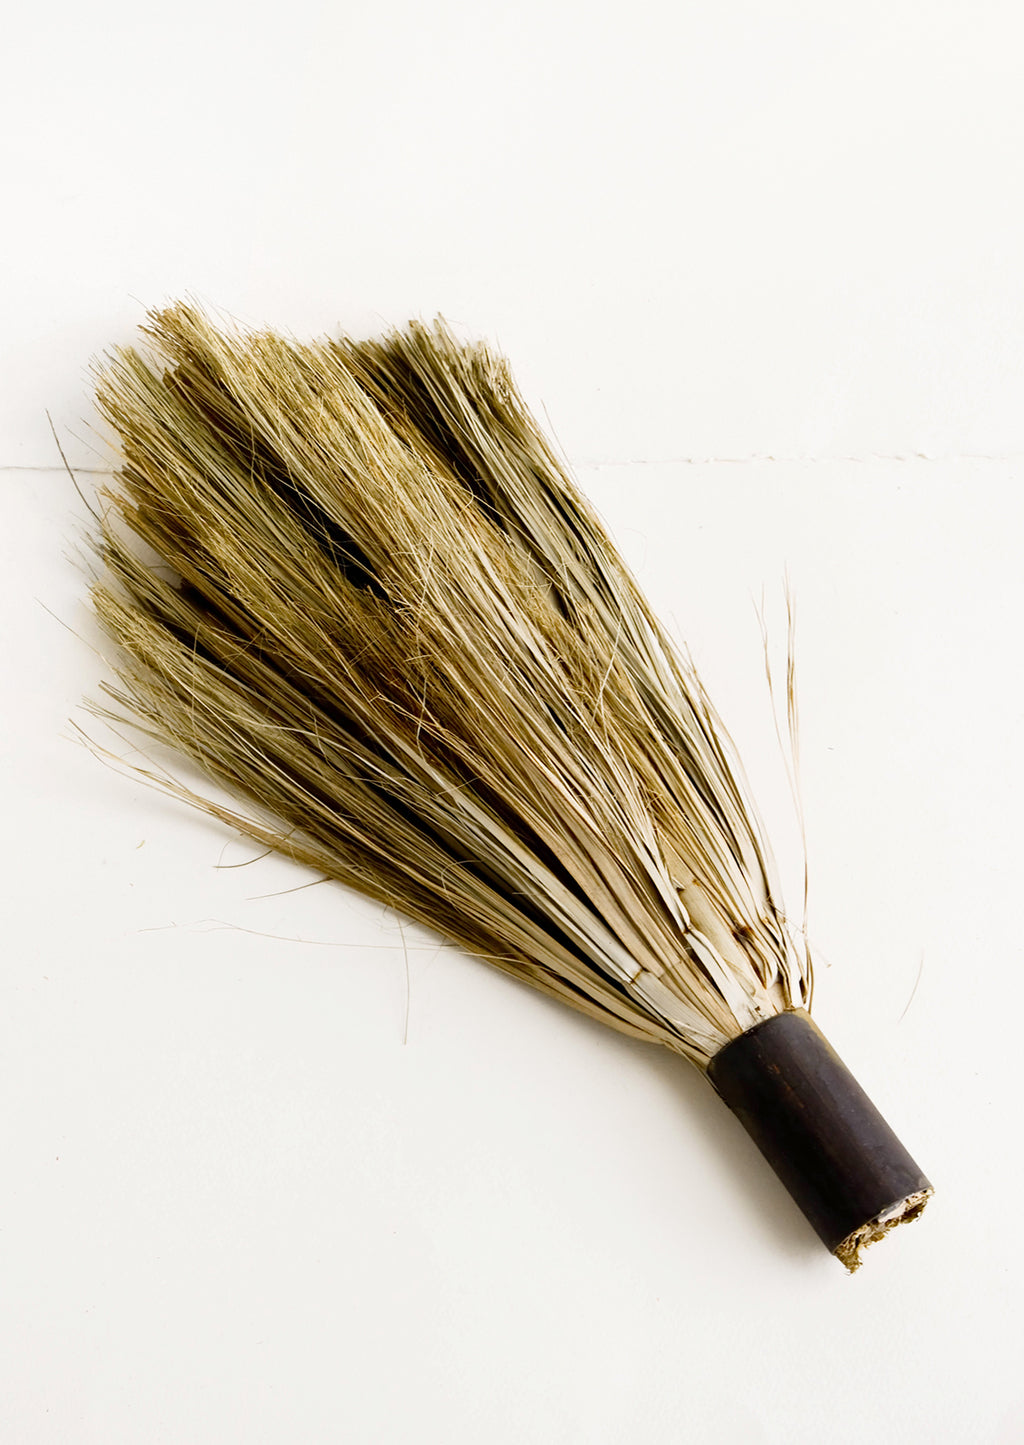 2: Primitive style handheld broom with cylindrical metal handle